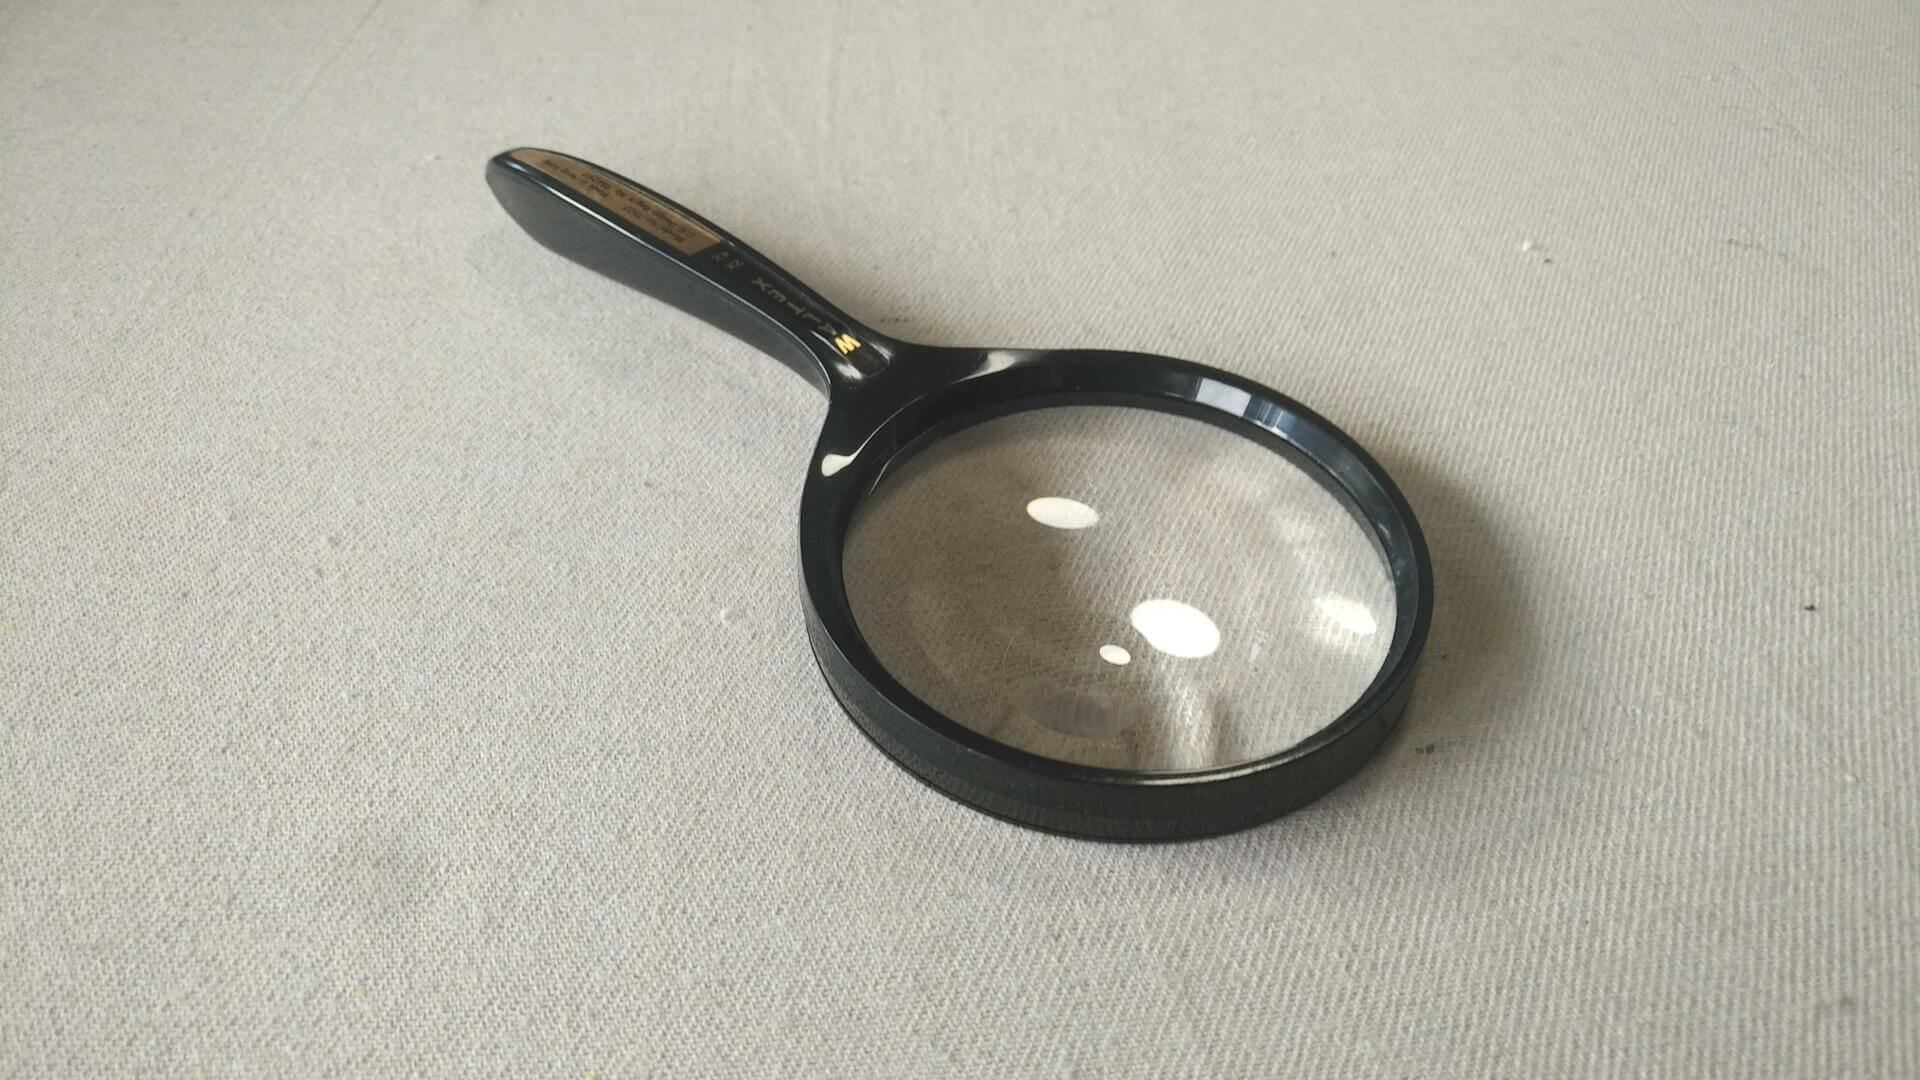 waltex-magnifying-glass-2x-4x-model-7507-ergonomic-handle-vintage-made-hong-kong-office-optical-magnification-tools